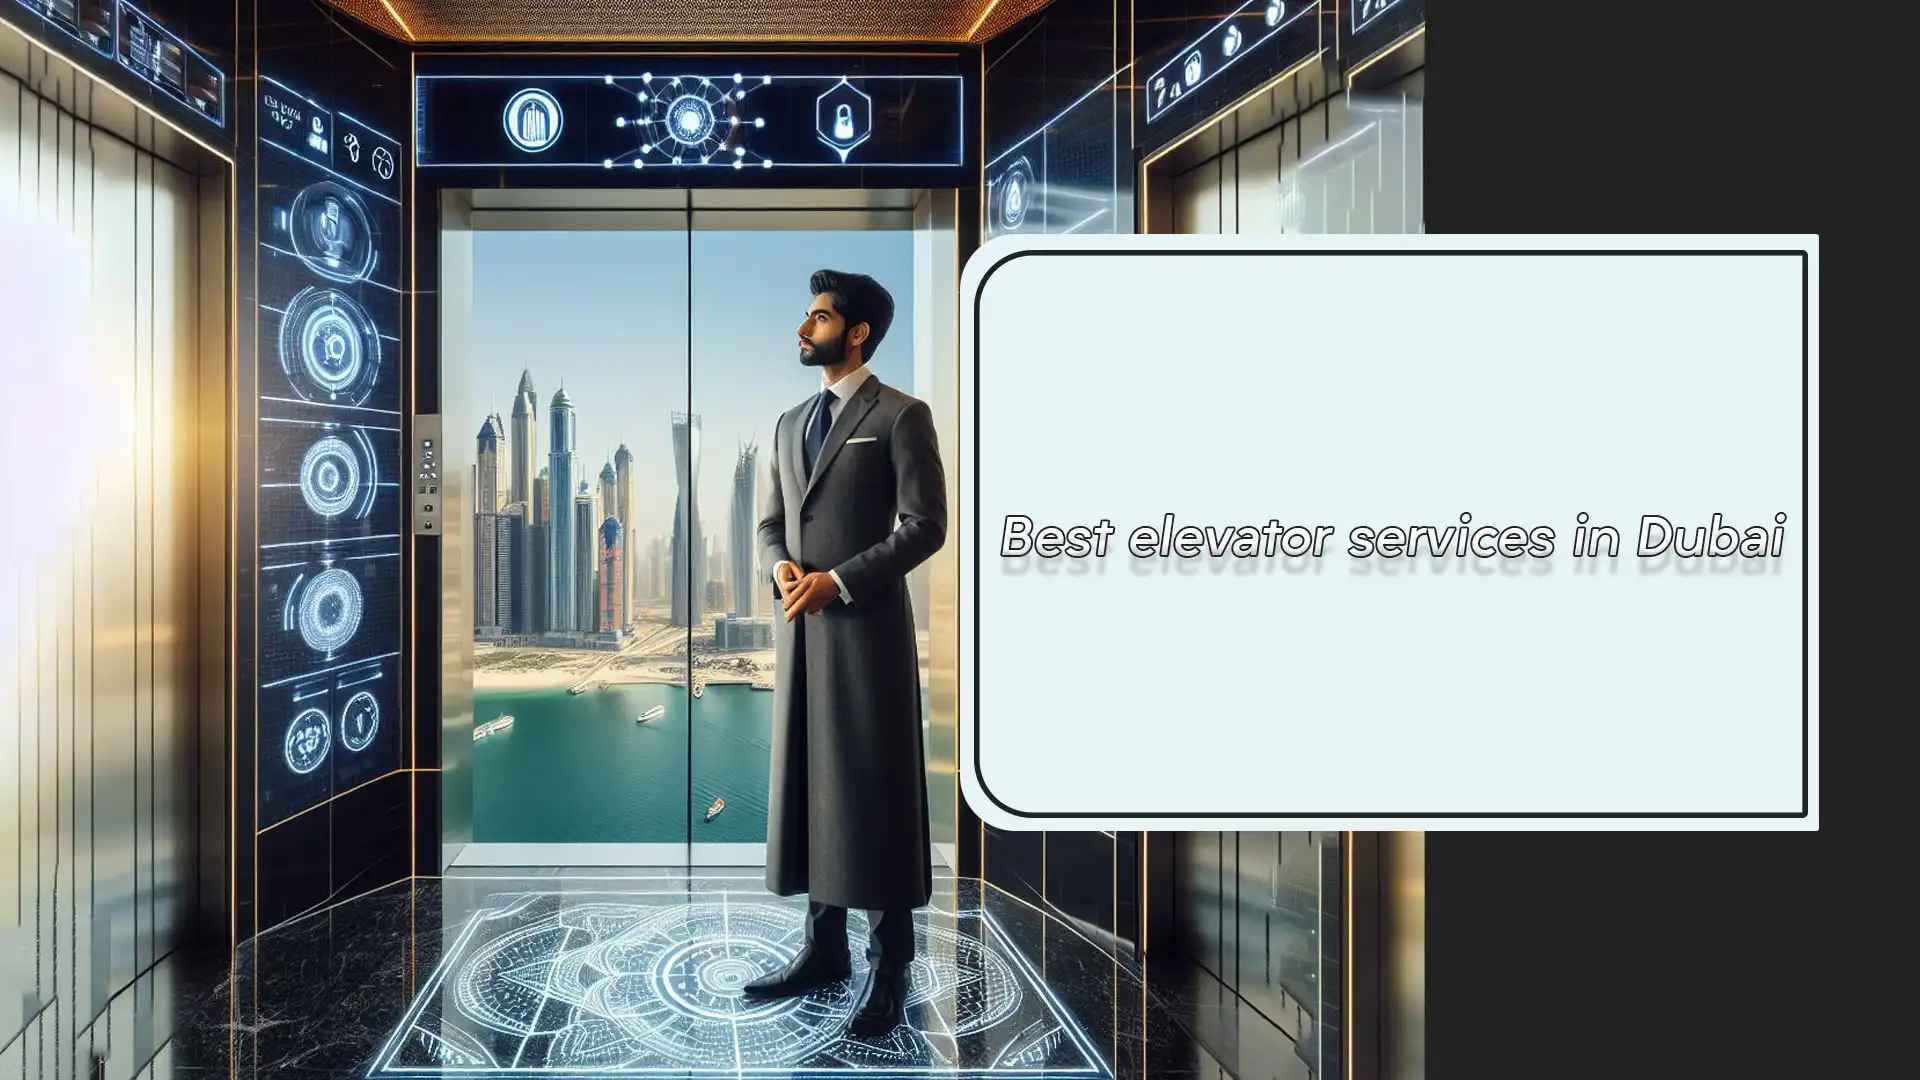 Best elevator services in Dubai